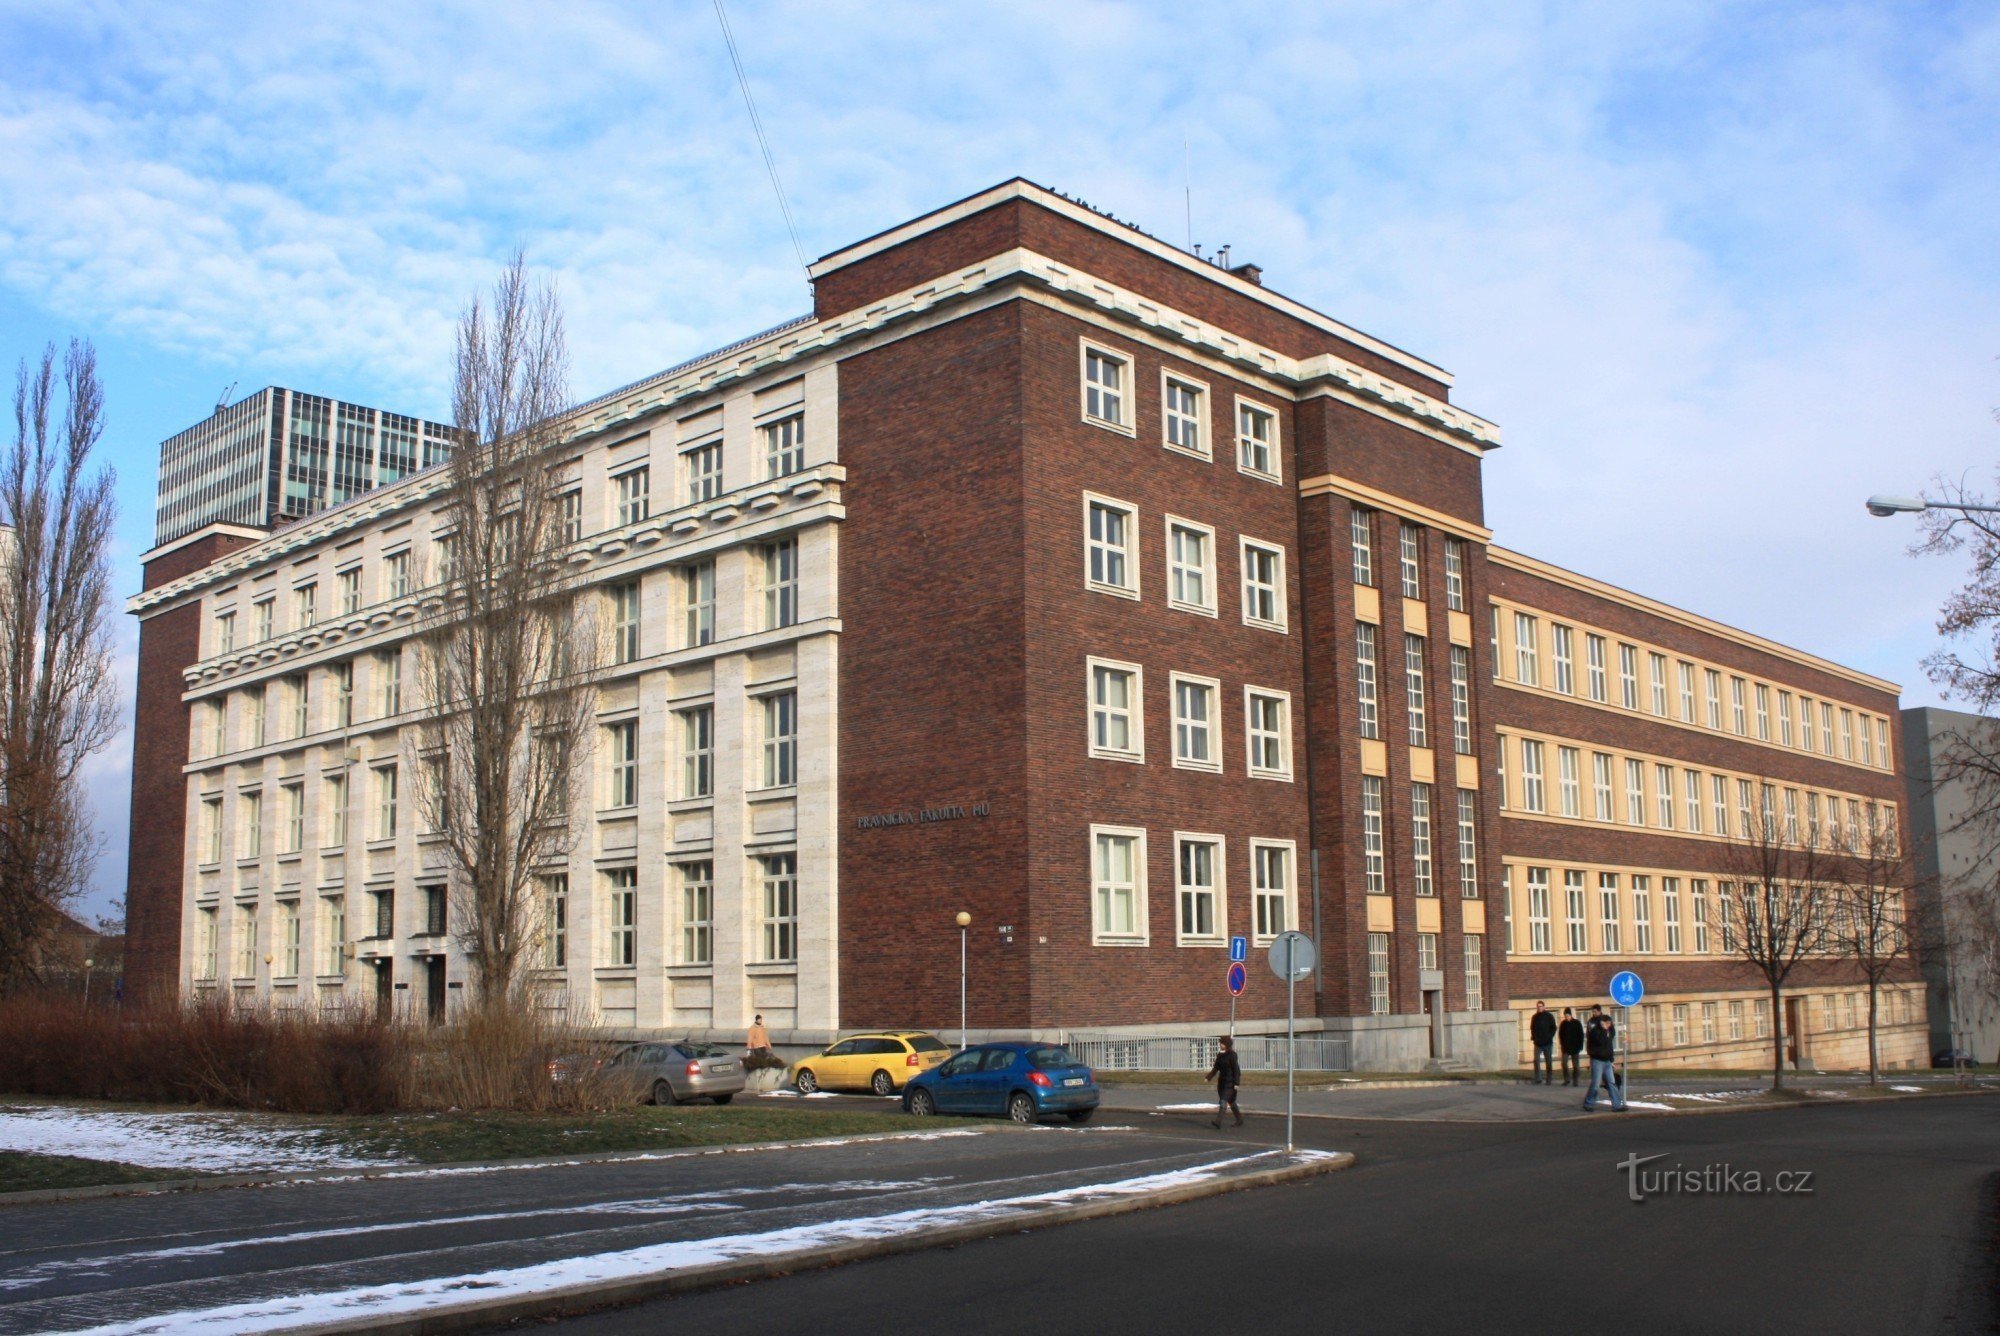 Brno - Faculty of Law